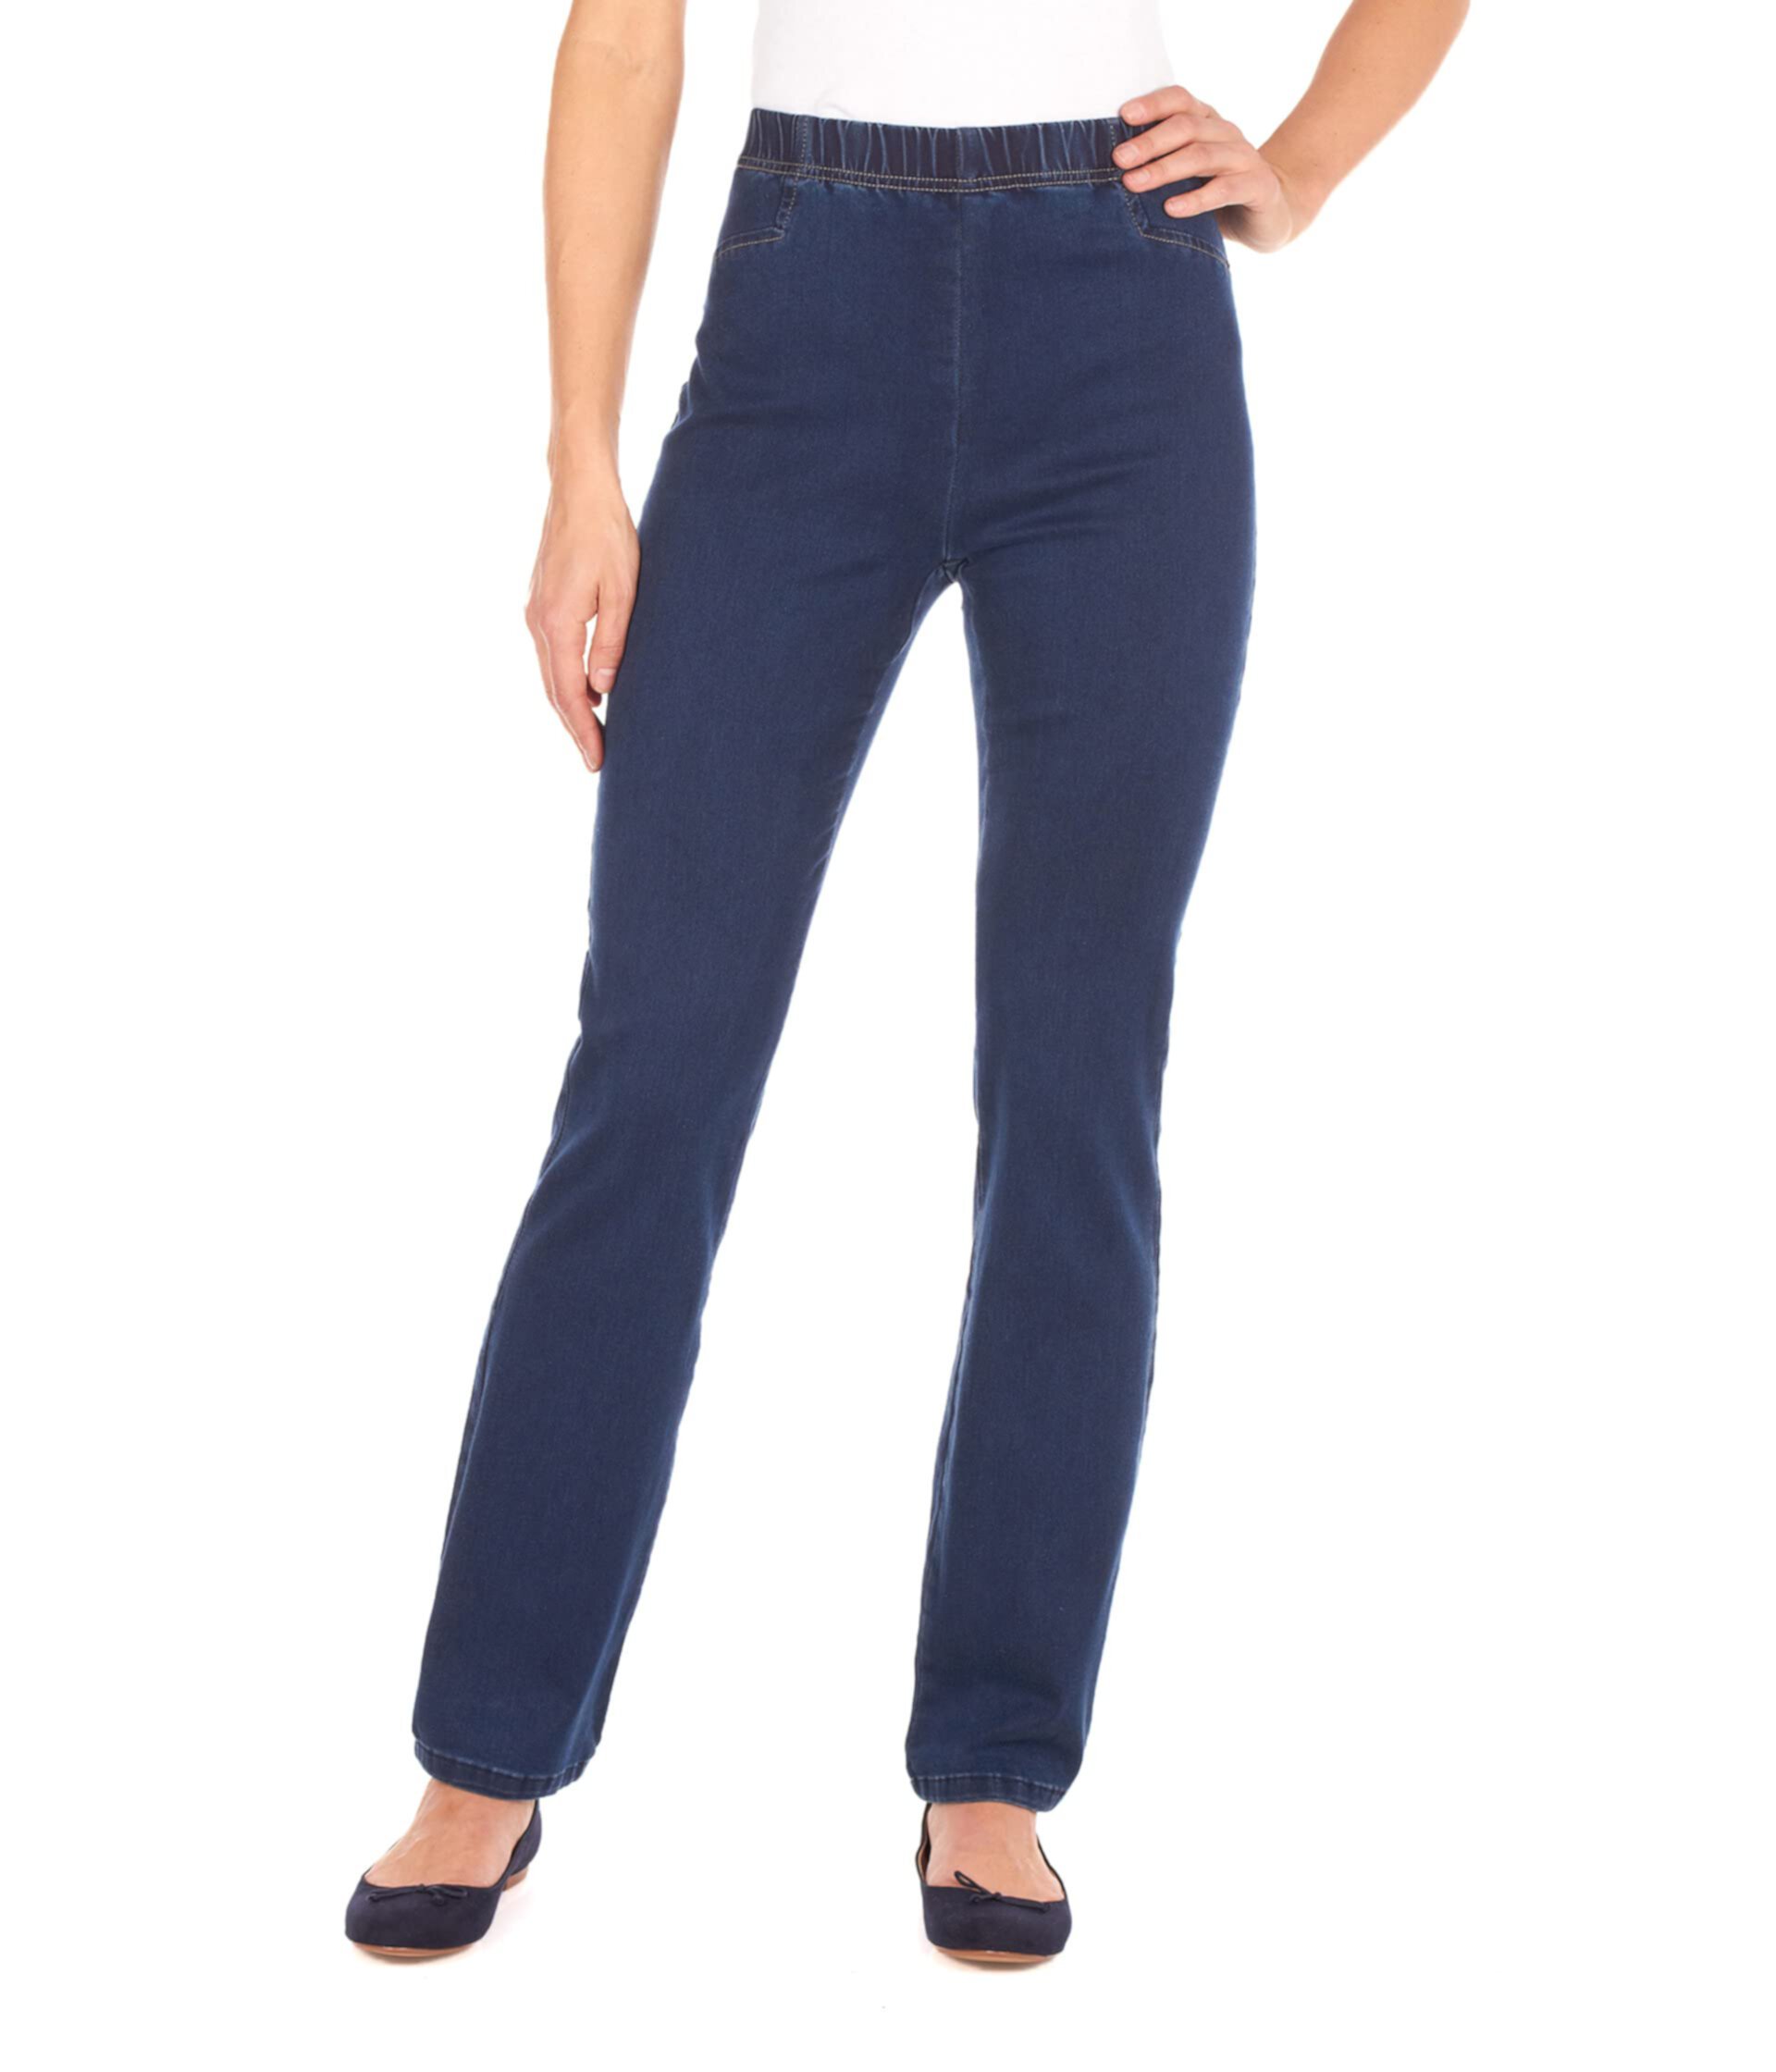 Стрижка без застежек Suzanne Bootcut цвета индиго FDJ French Dressing Jeans